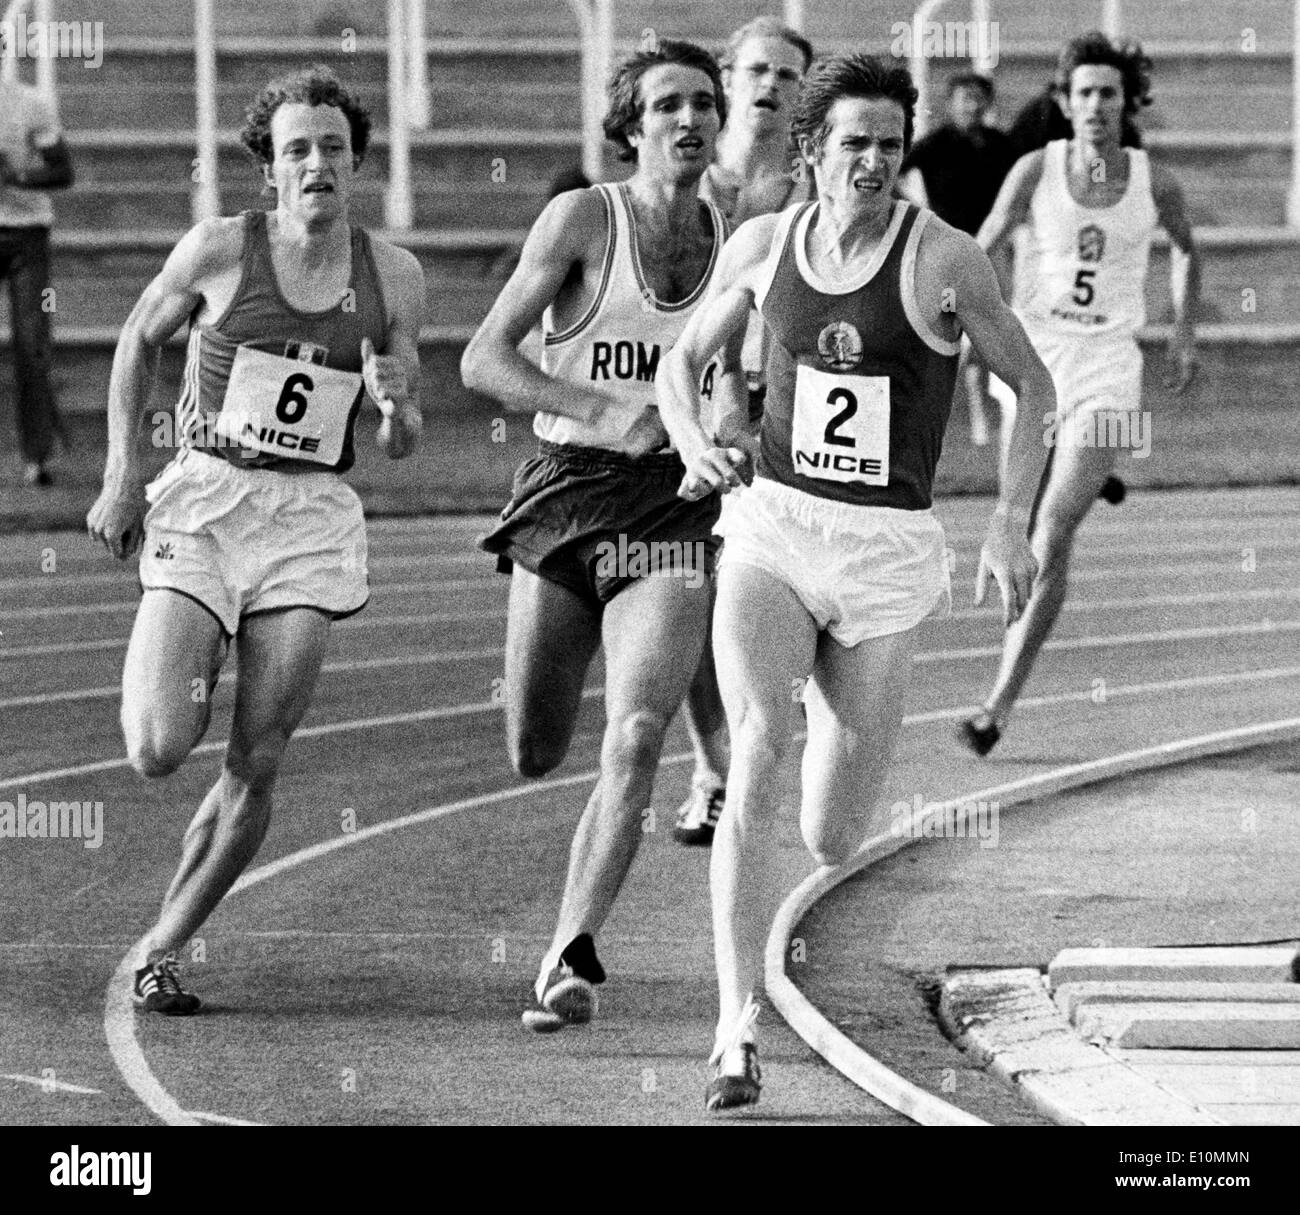 Est tedesco Dieter FROMM (numero 2) e Francese runner, MARCEL PHILIPPE (numero 6) Foto Stock